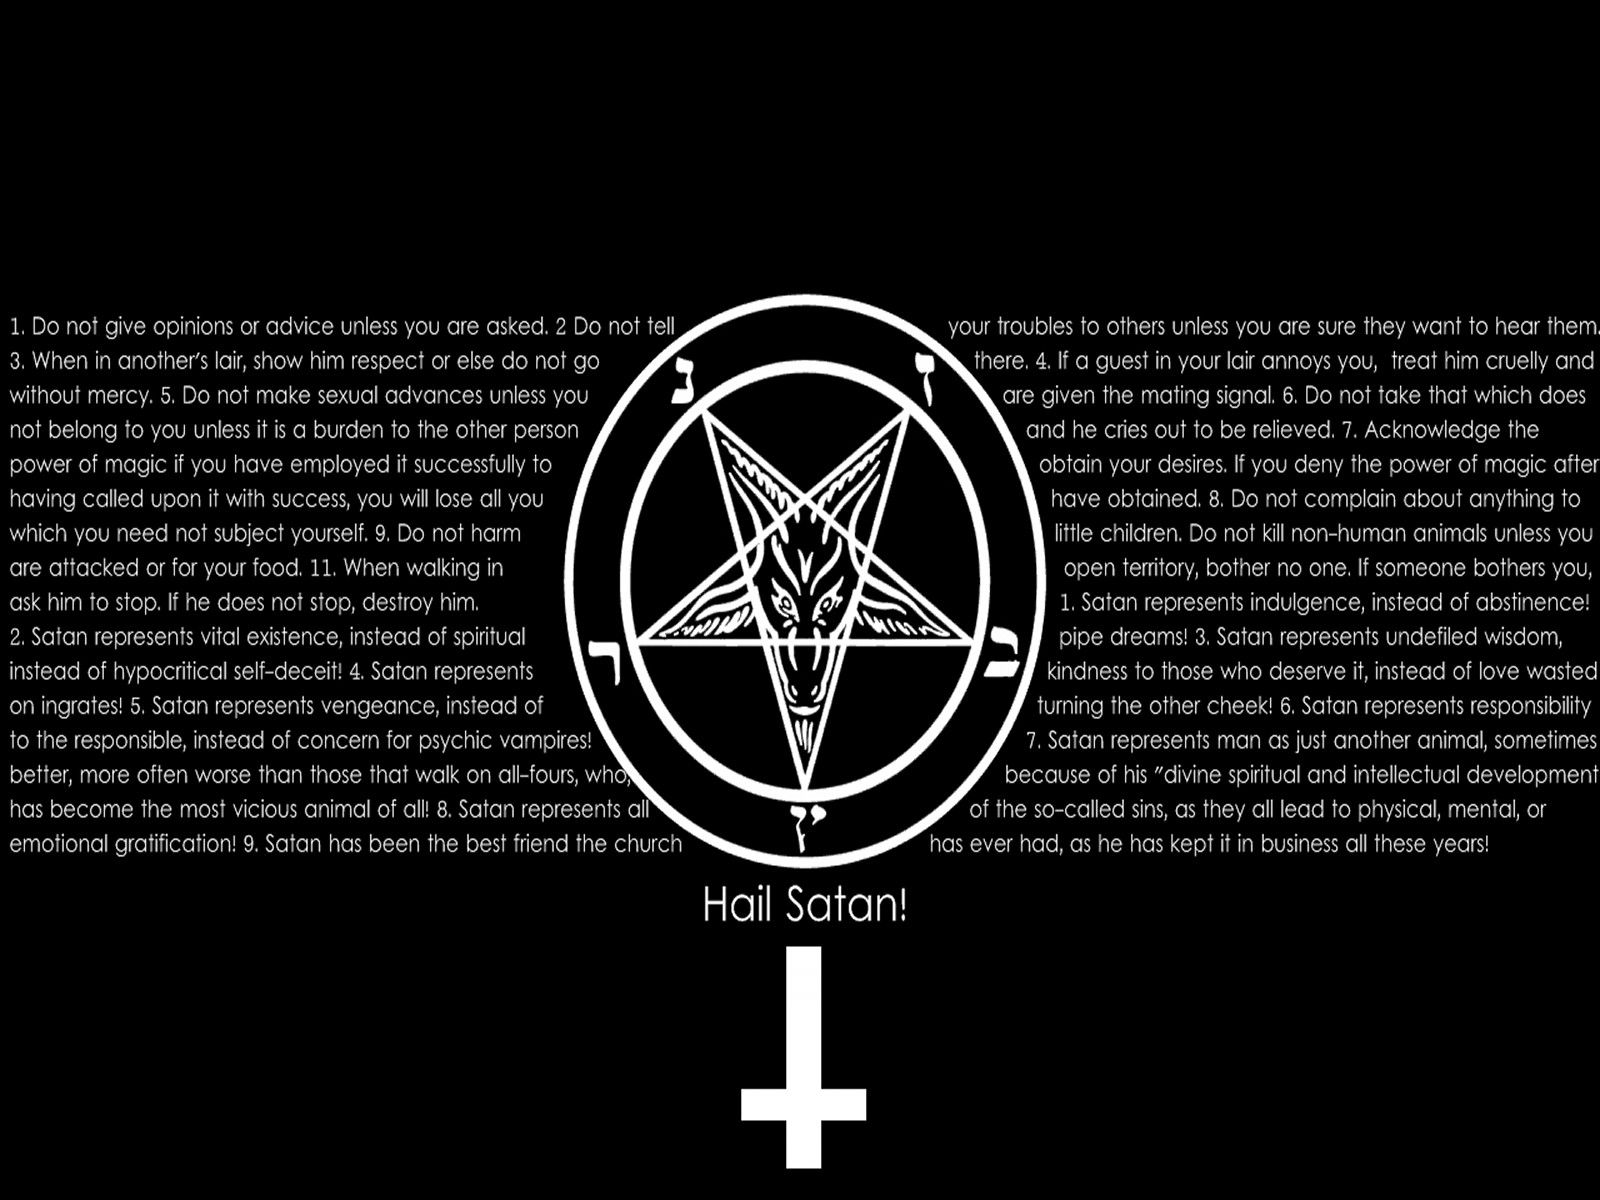 Dark Horror Occult Satan Penta Cross Religion Wallpaper Background